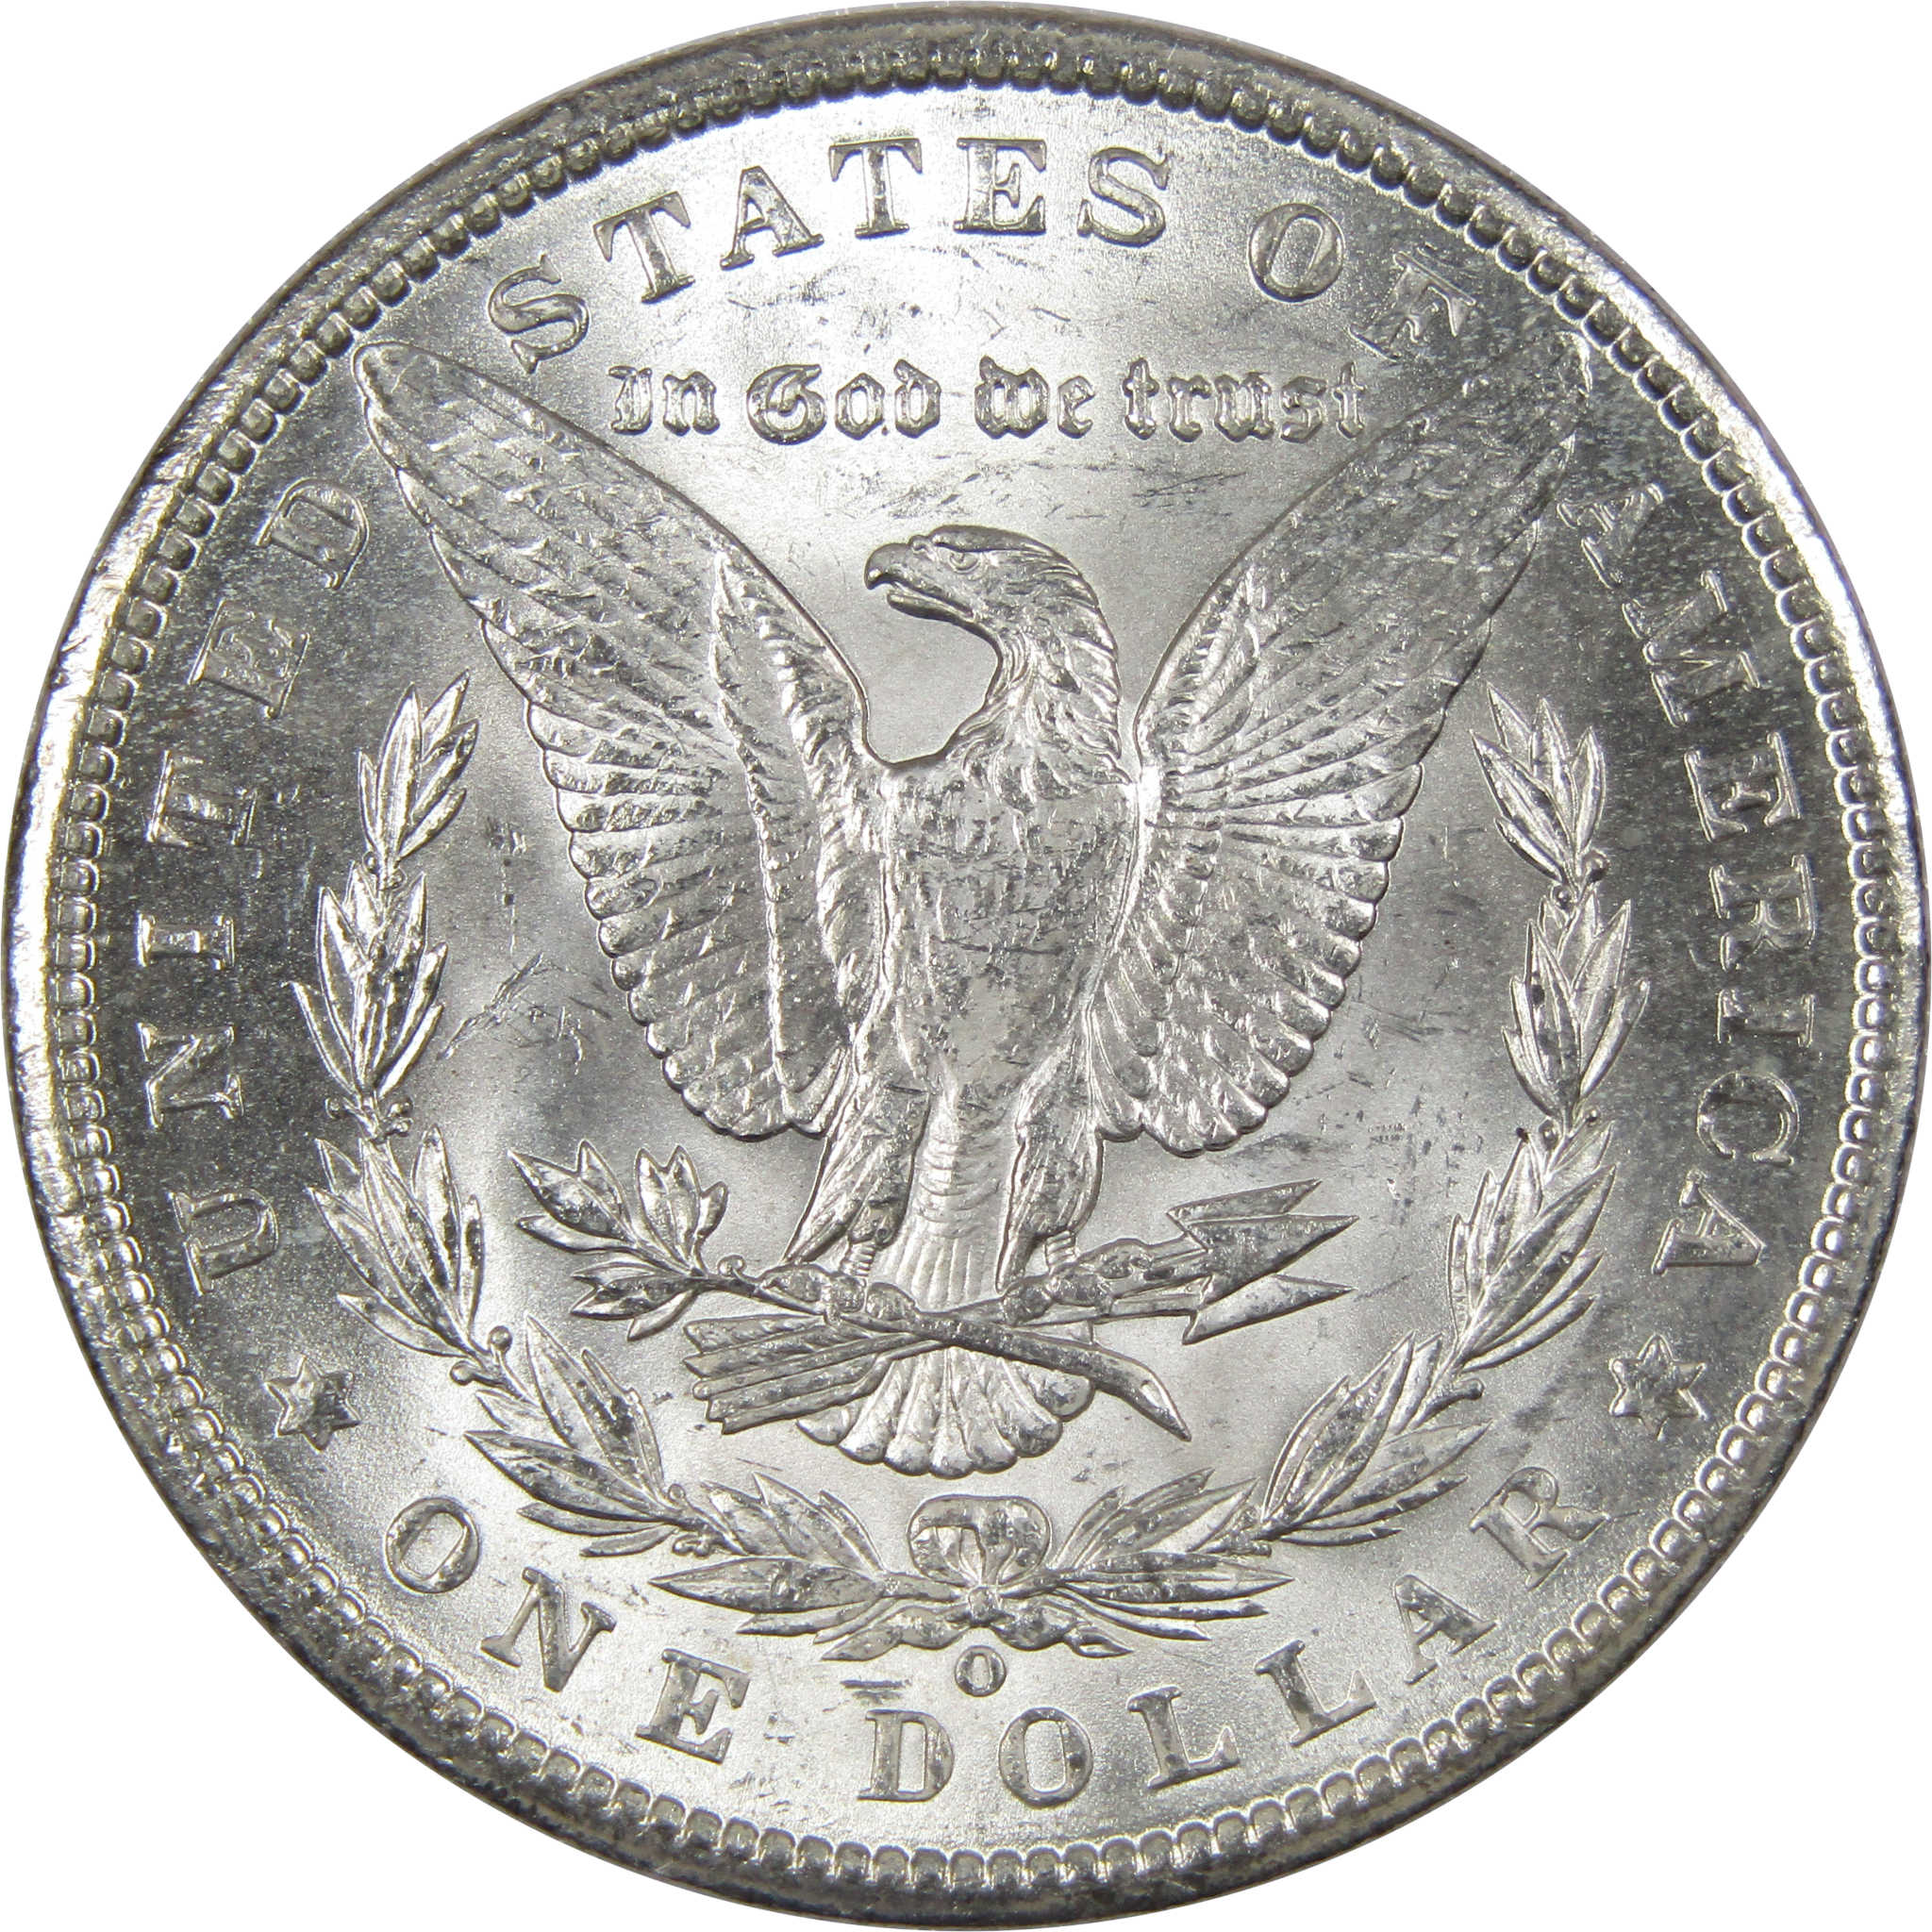 1900 O Morgan Dollar BU Uncirculated Mint State 90% Silver SKU:IPC9773 - Morgan coin - Morgan silver dollar - Morgan silver dollar for sale - Profile Coins &amp; Collectibles